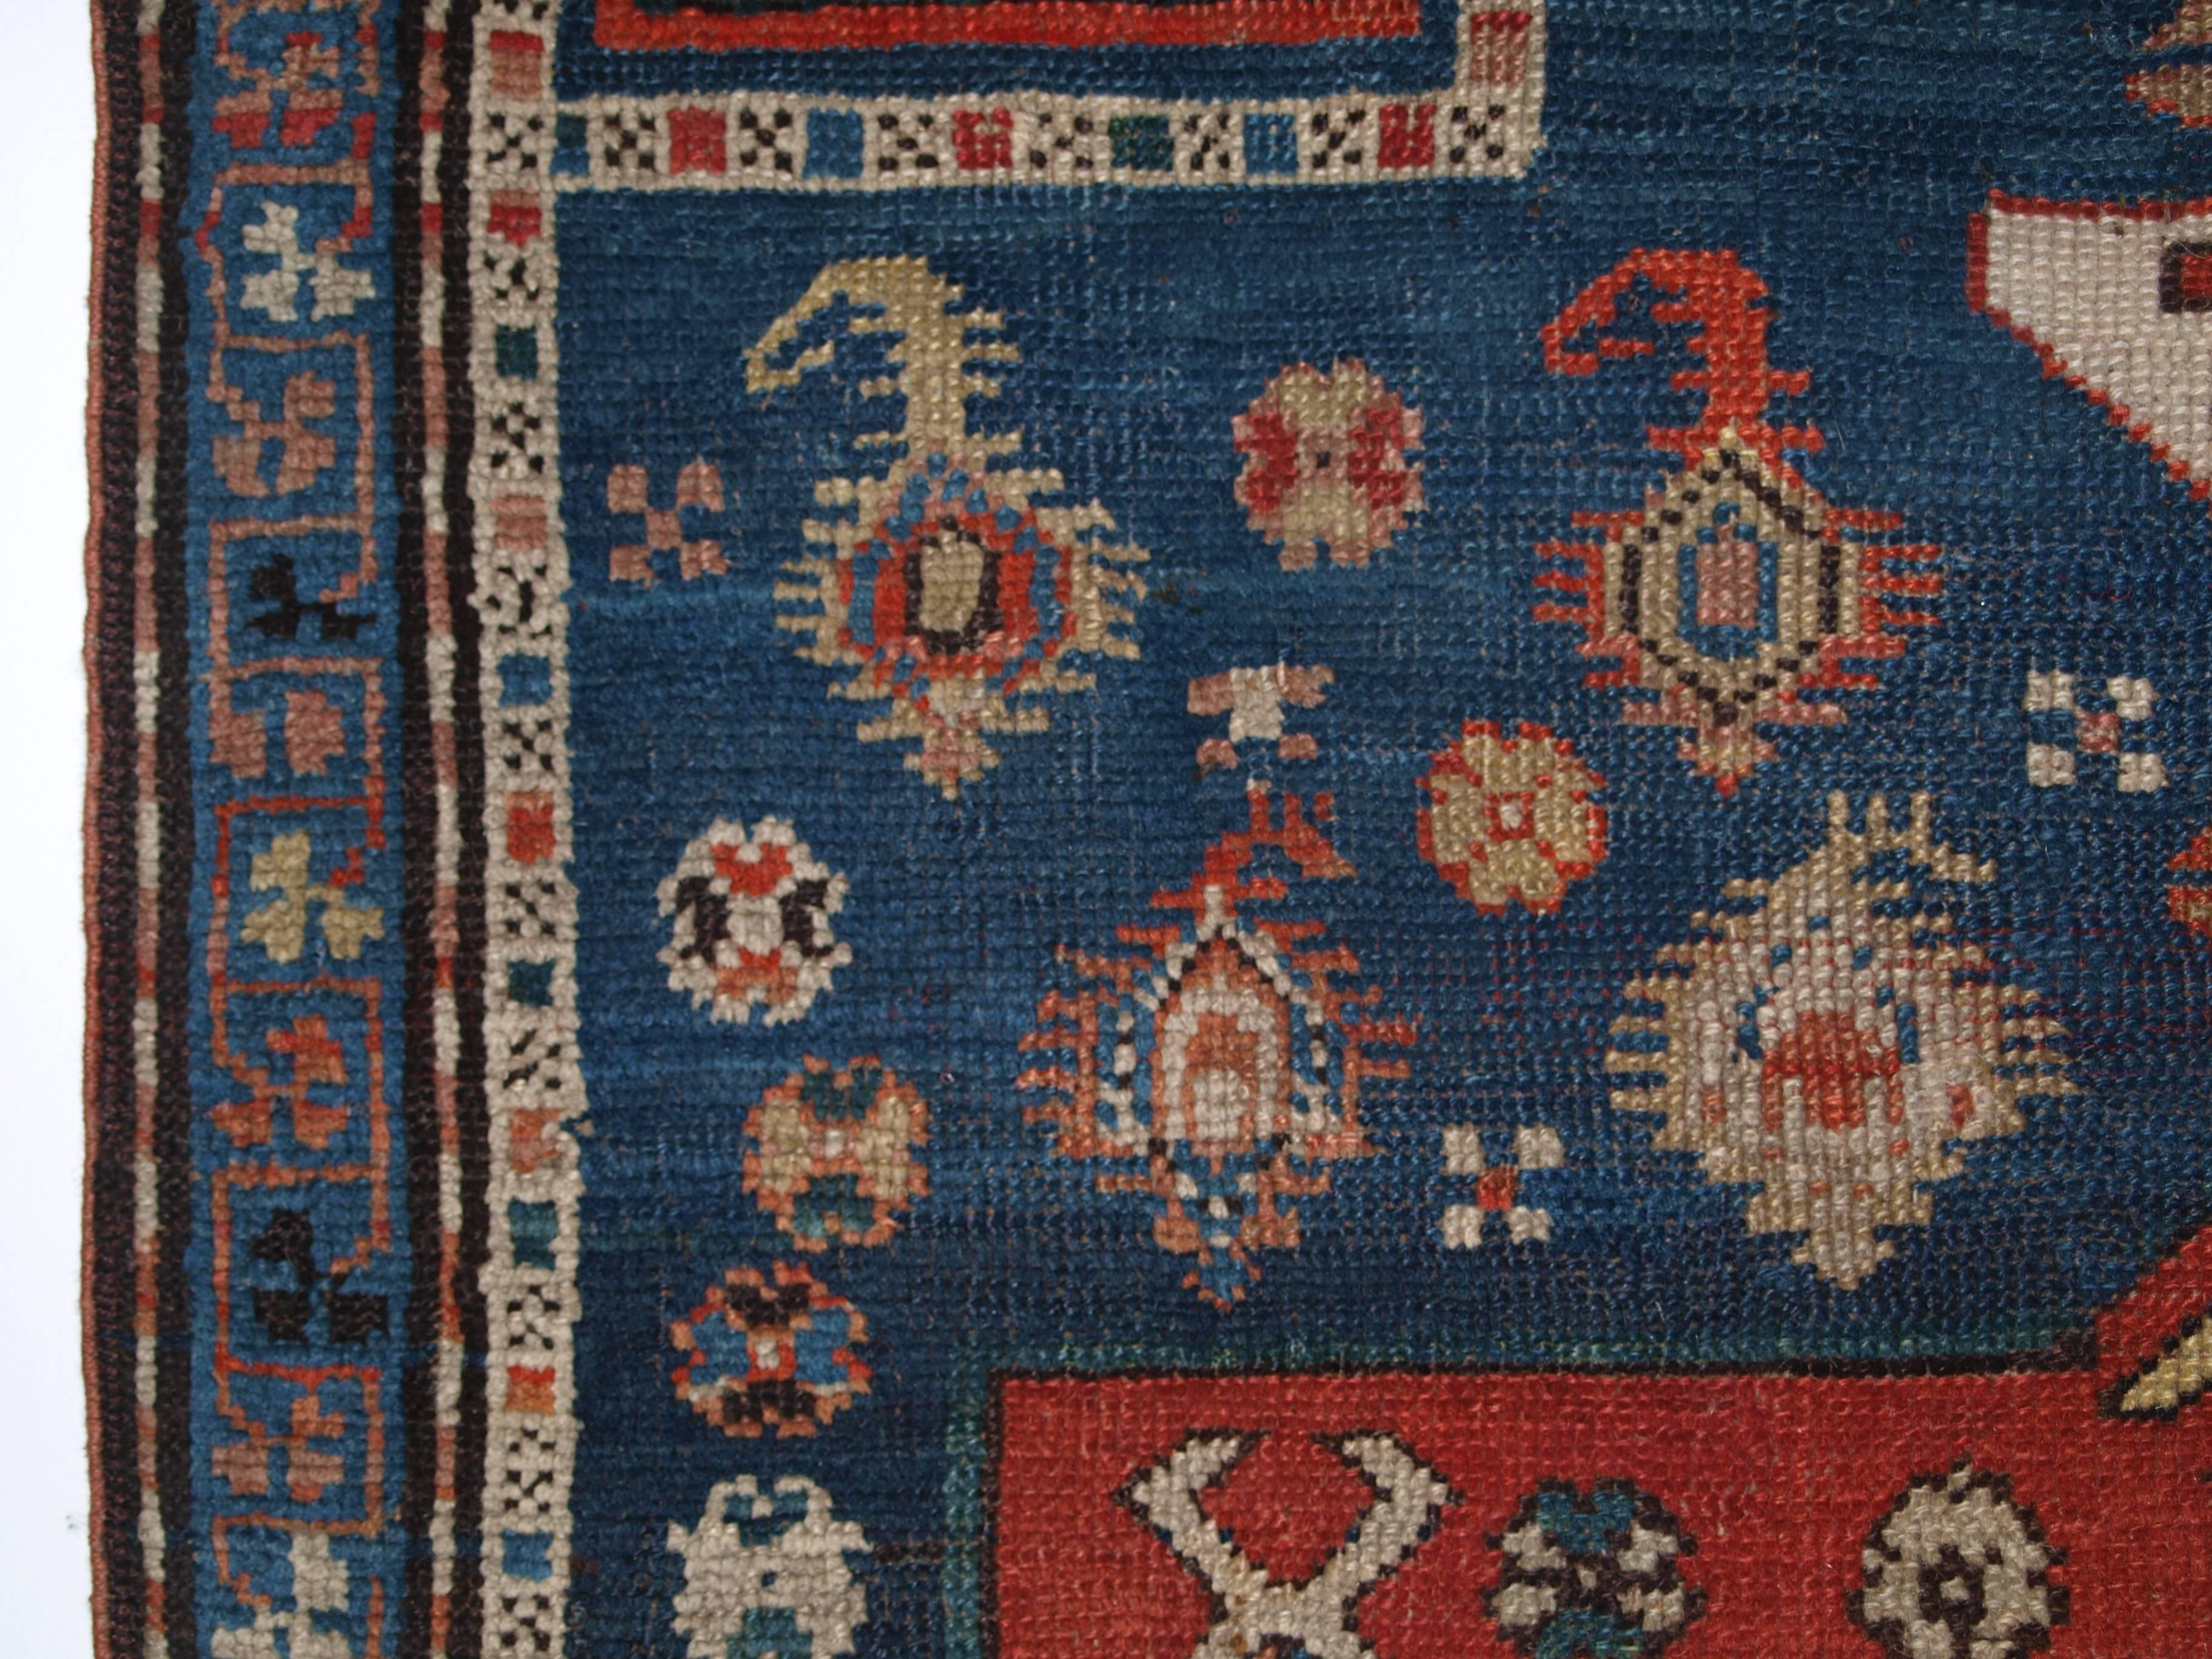 Antique Caucasian Prayer Rug, Karabagh Region of Scarce Design For Sale 5